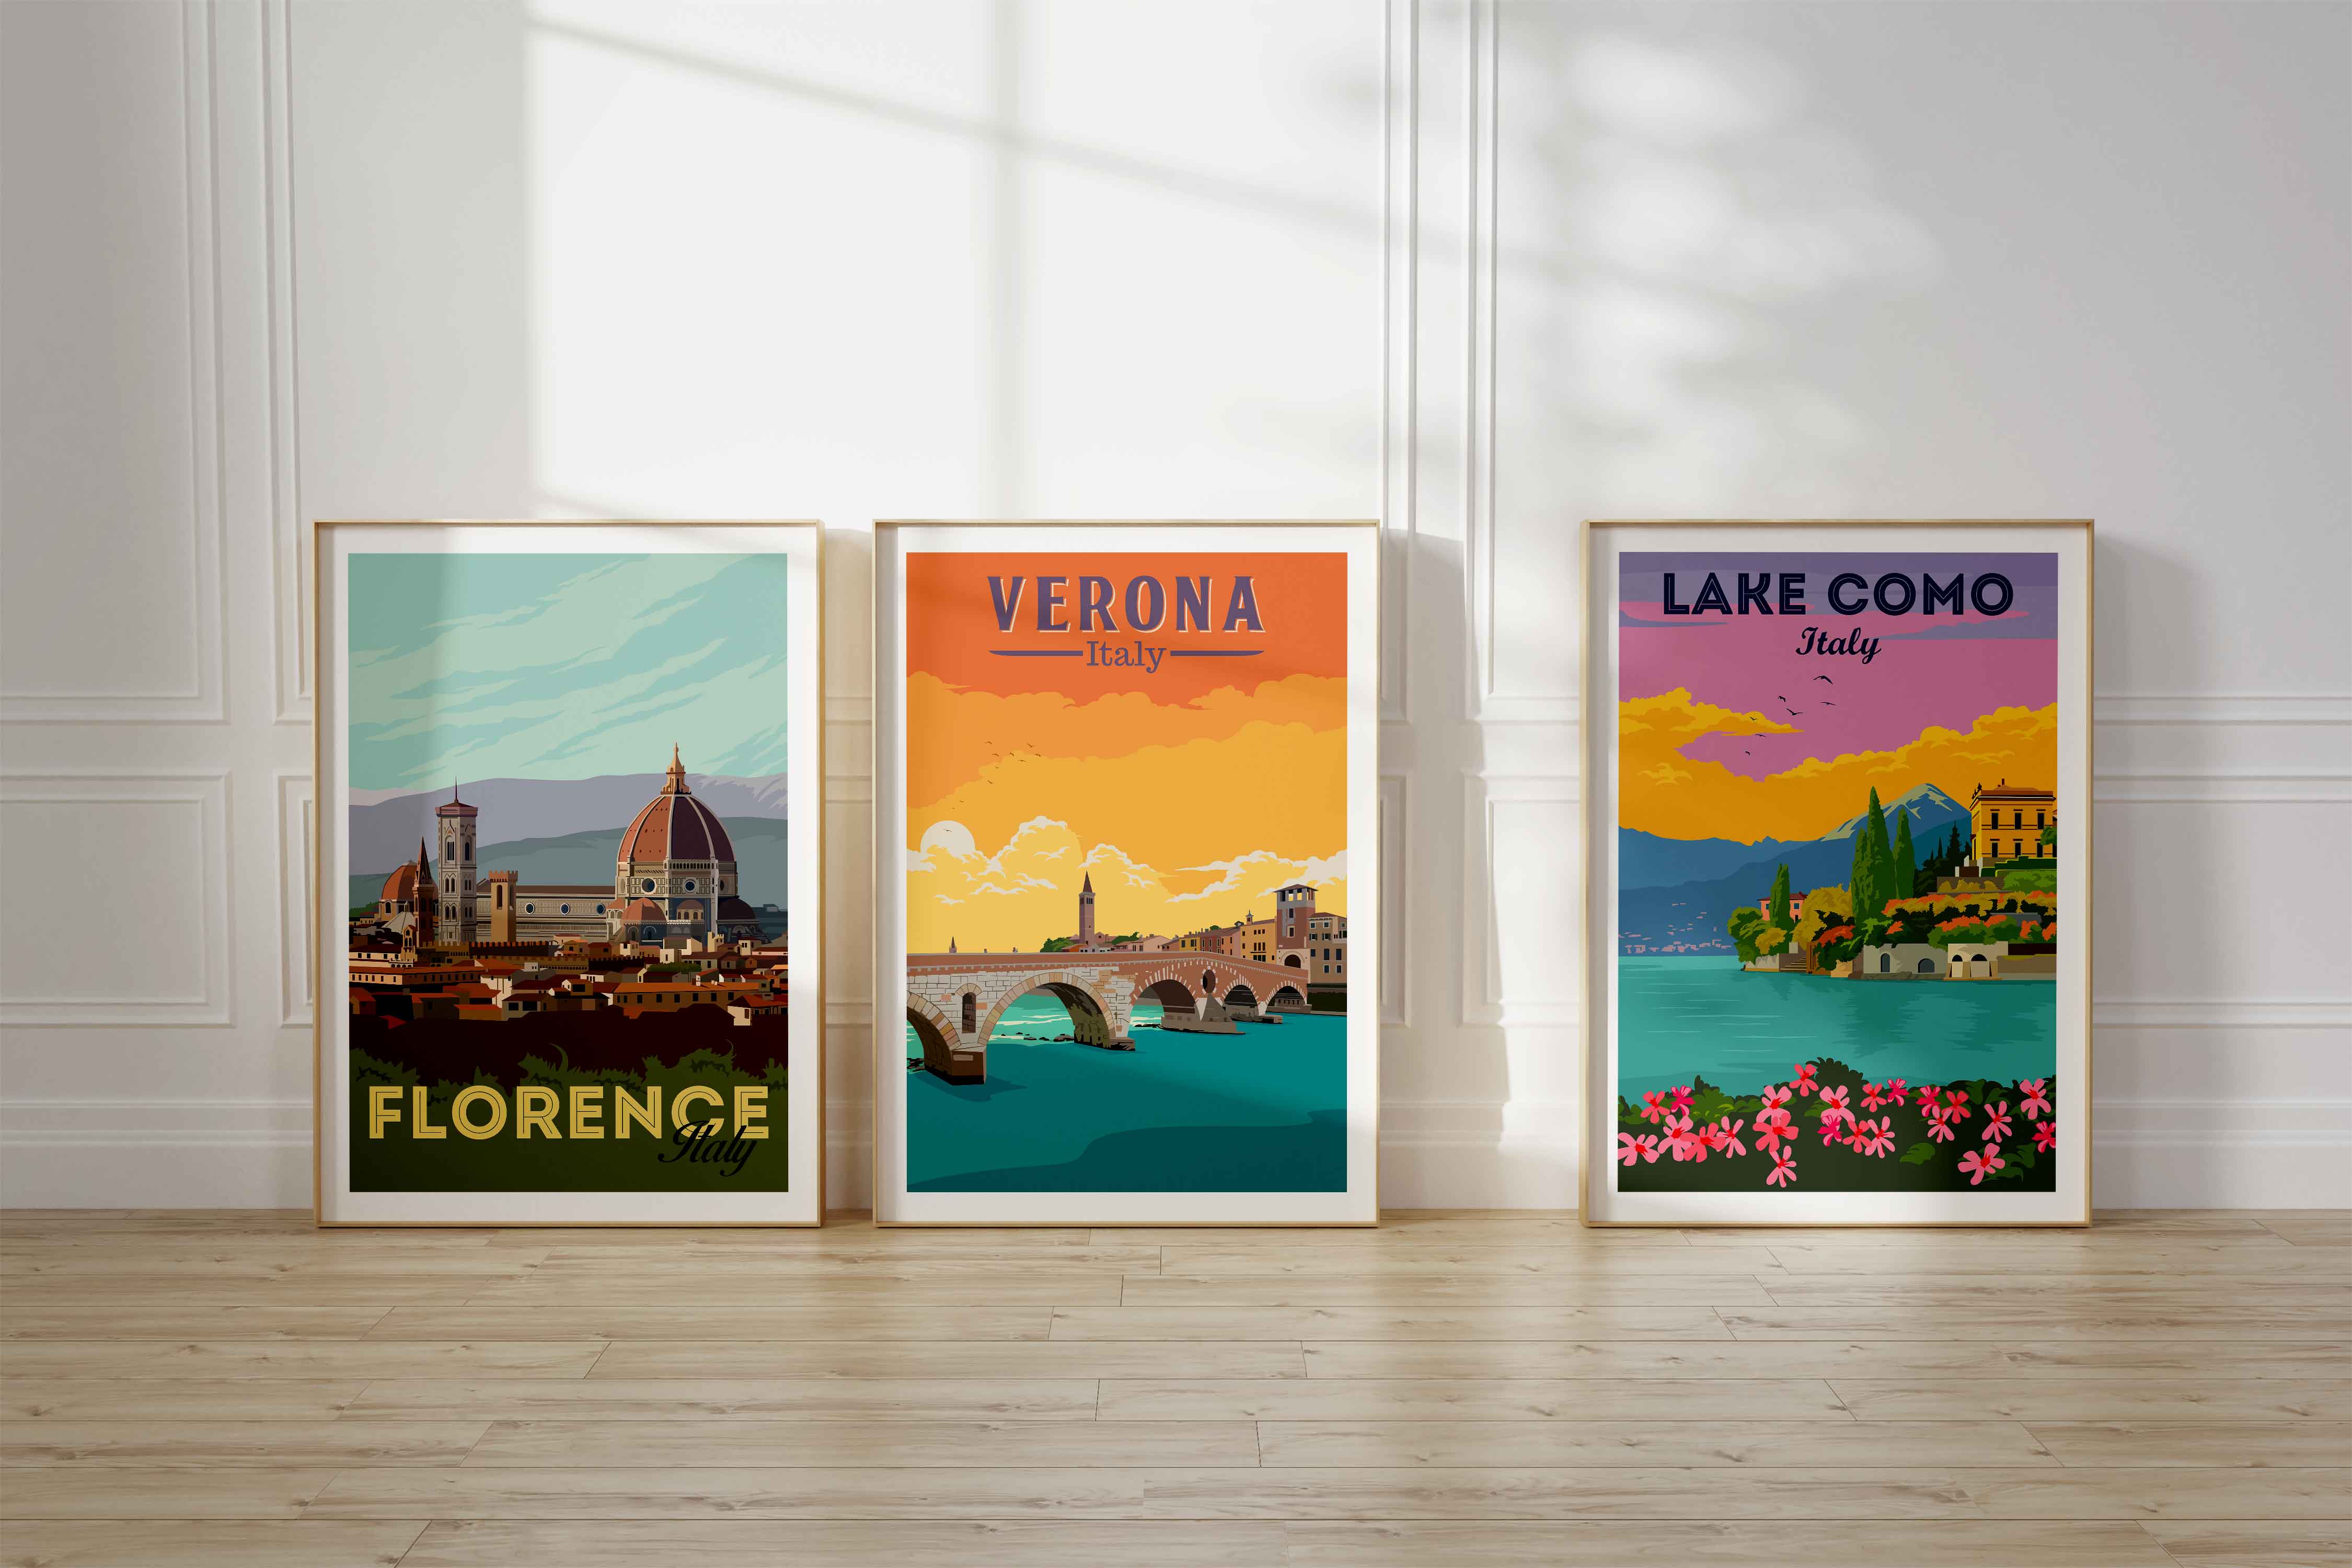 lisbon travel posters